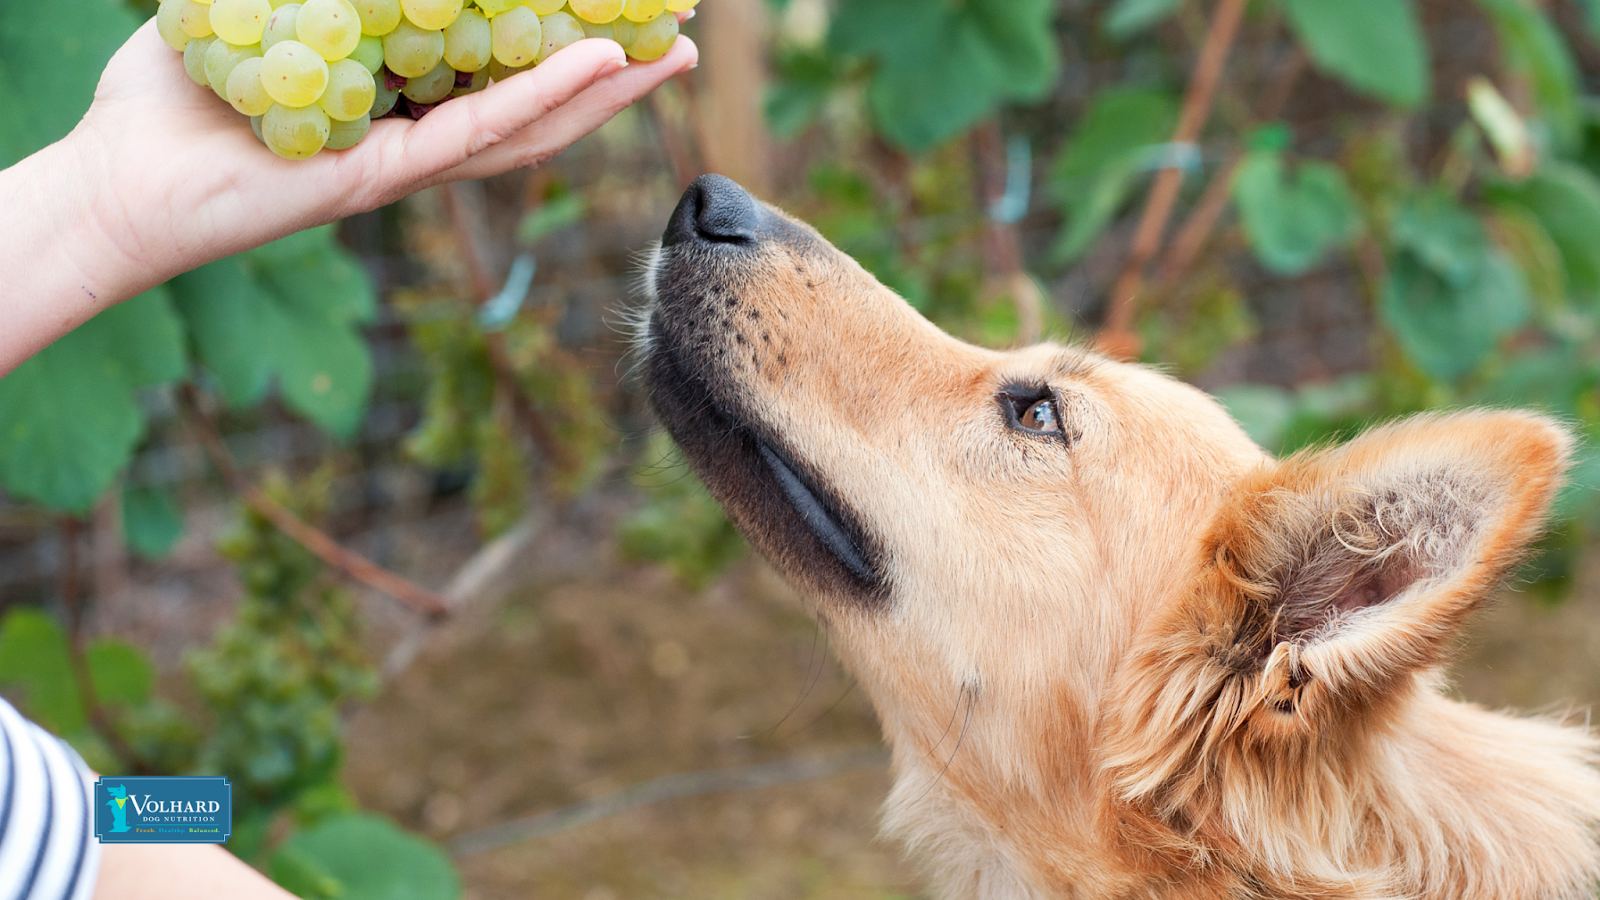 Dog and grapes